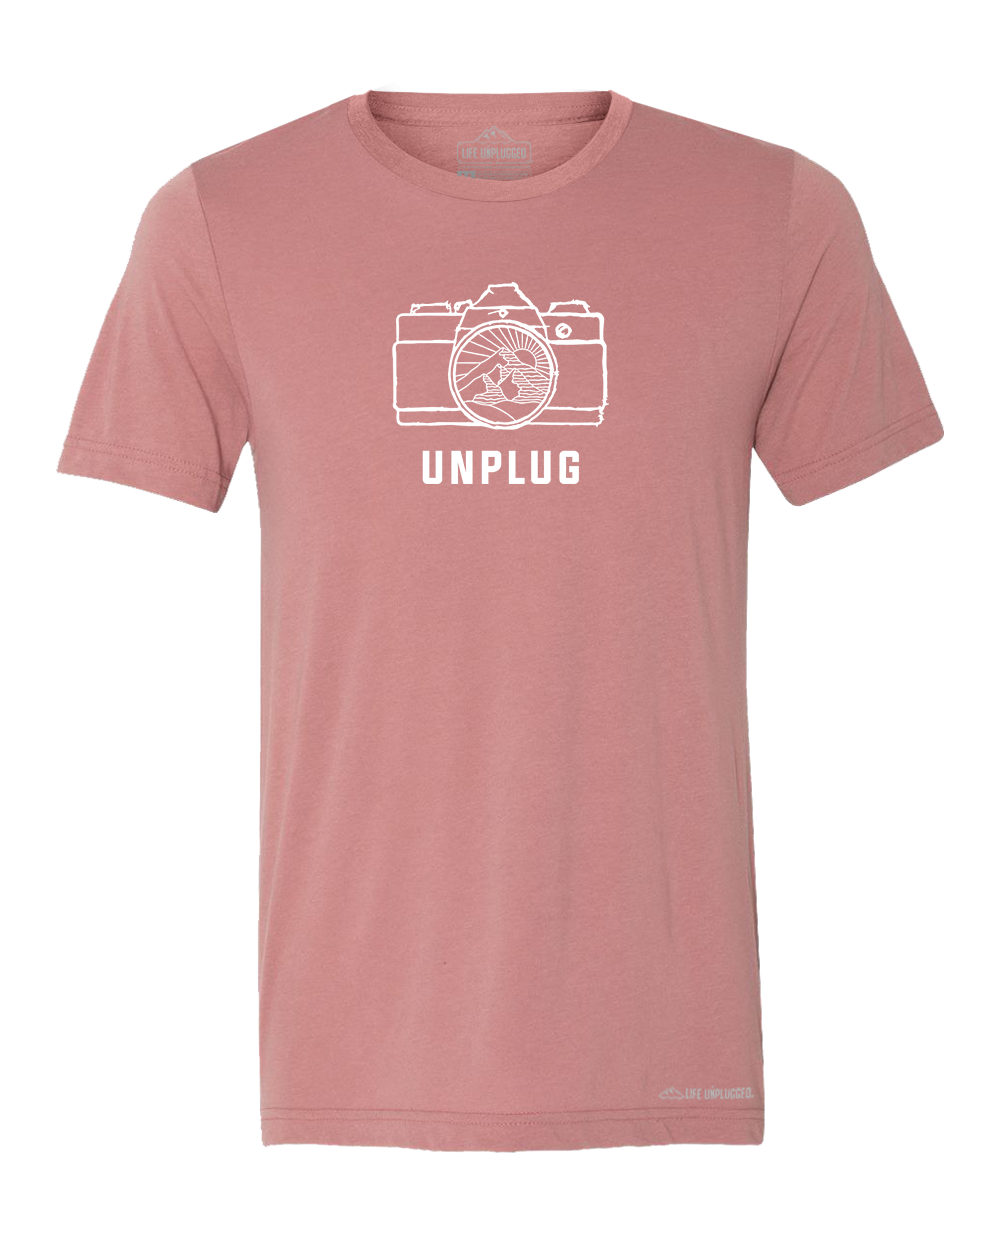 Camera Mountain Lens Premium Triblend T-Shirt - Life Unplugged